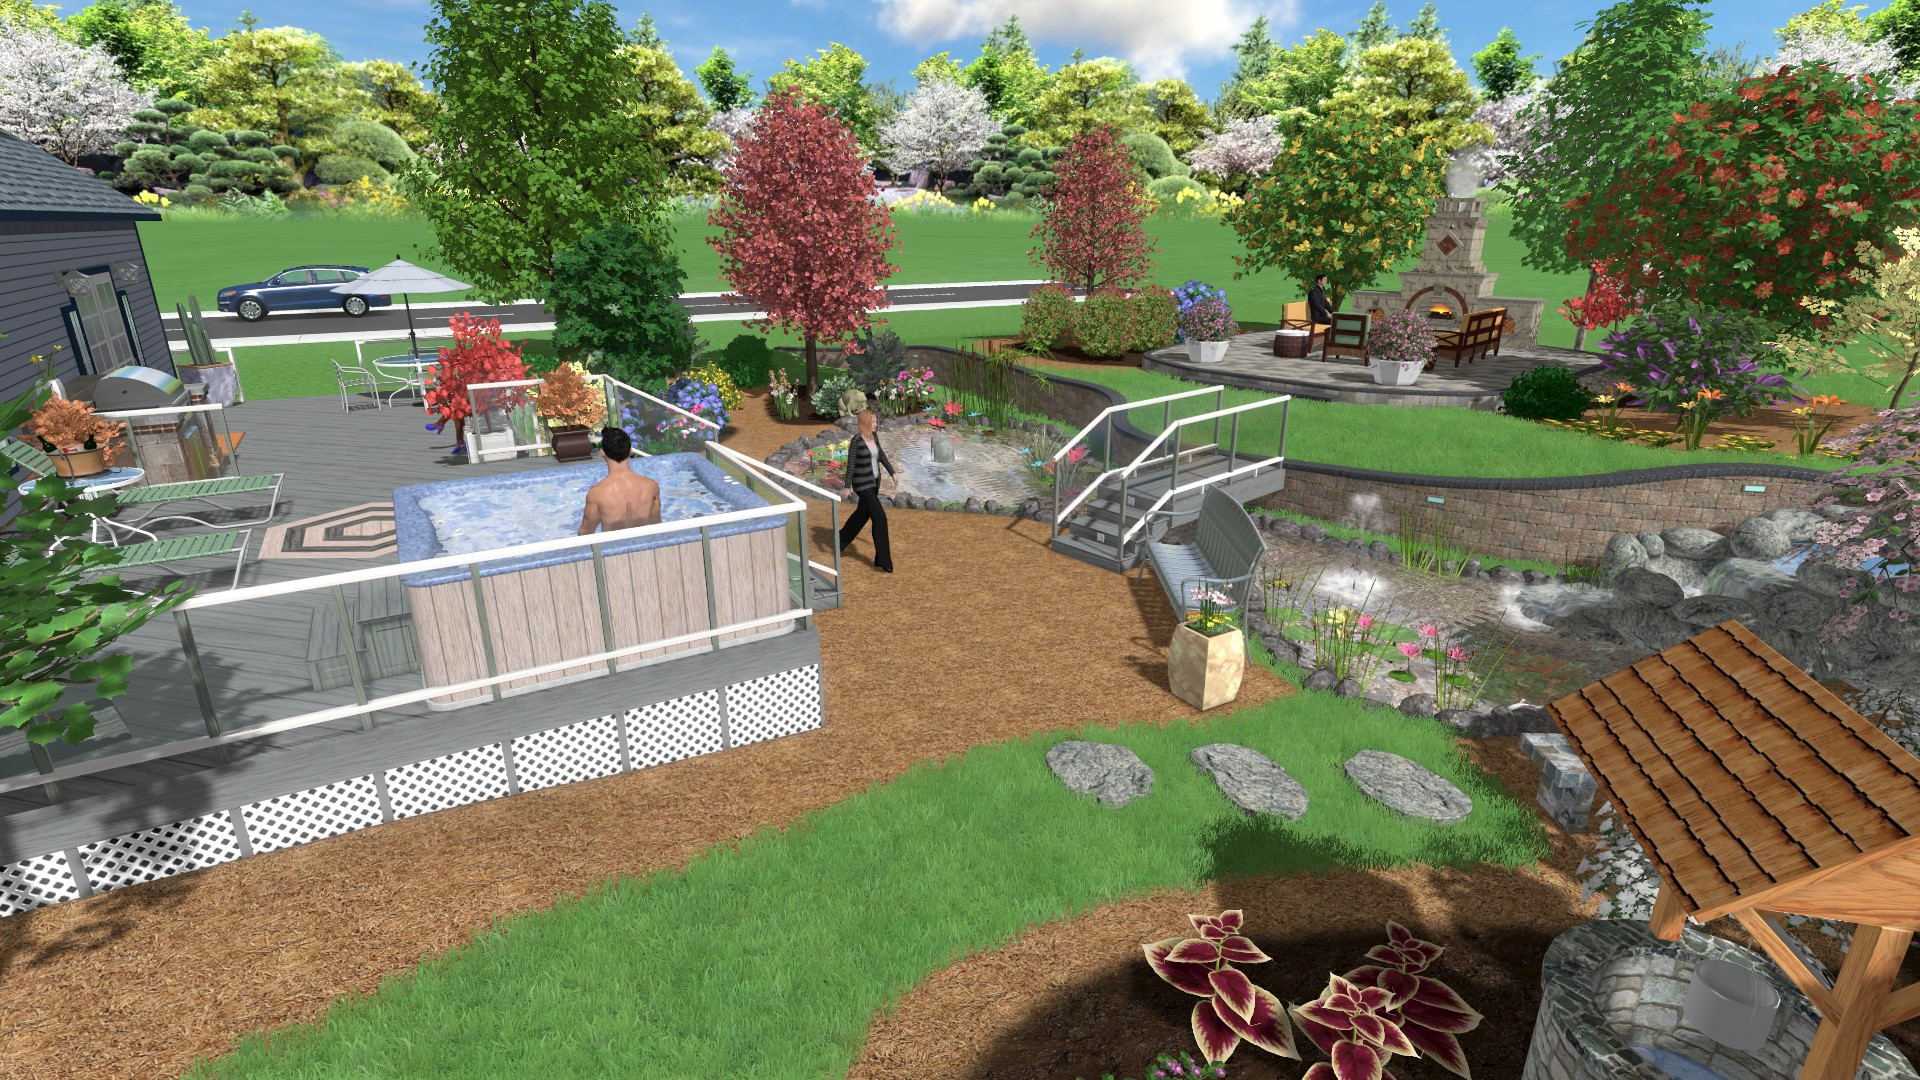 Best ideas about Backyard Landscape Designs
. Save or Pin Landscape Design Software Gallery Now.